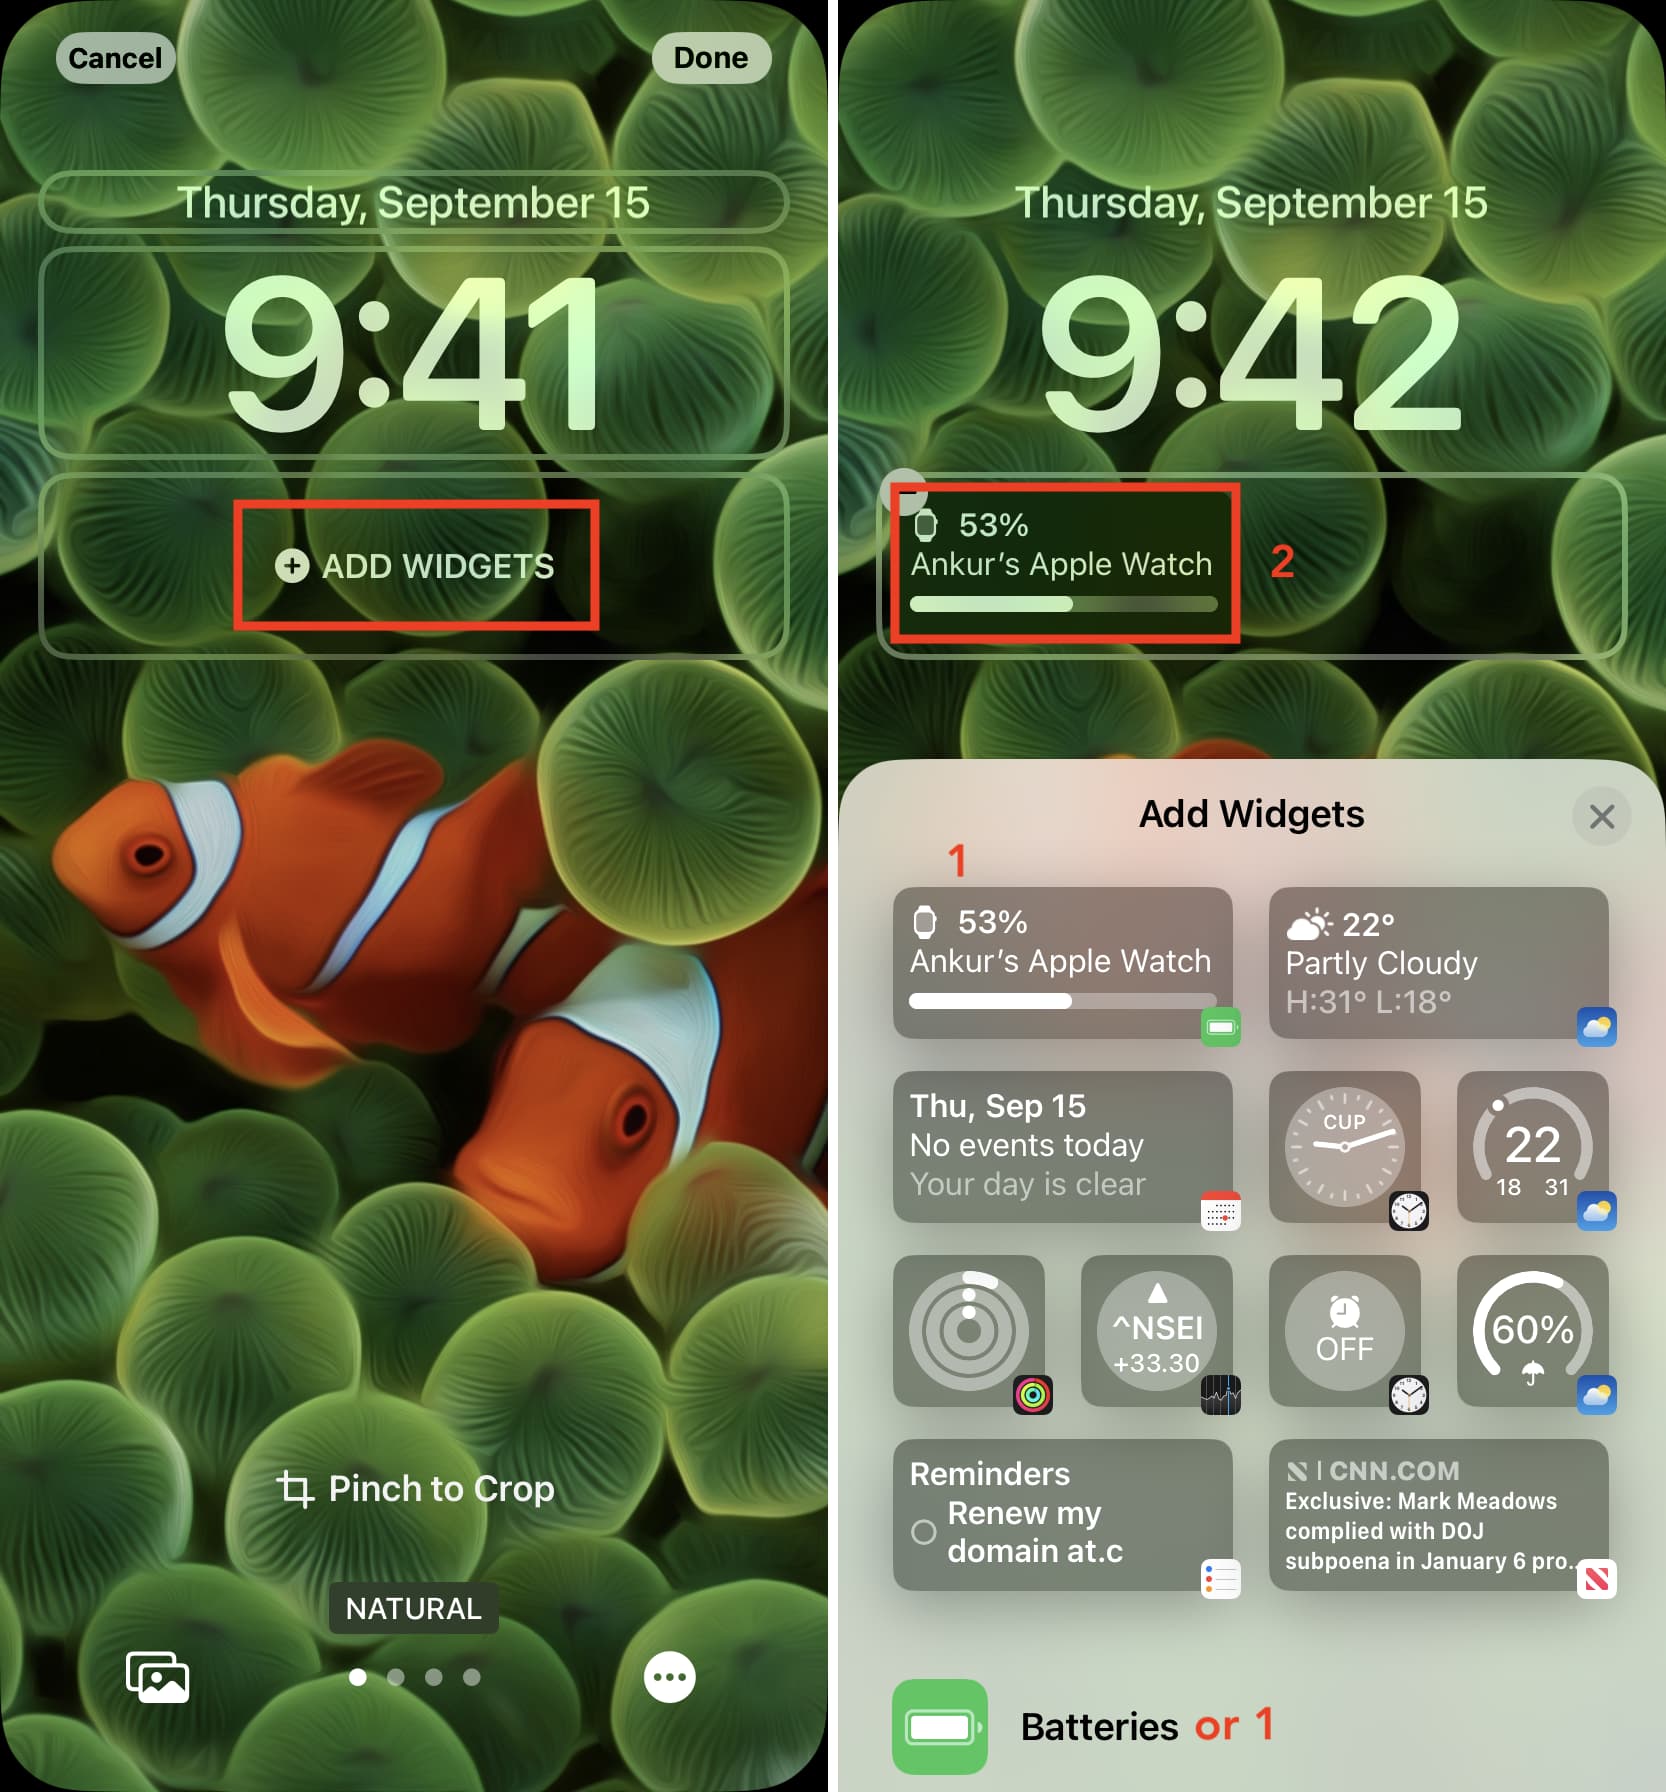 Tap Add Widgets and add batteries widget to iPhone Lock Screen